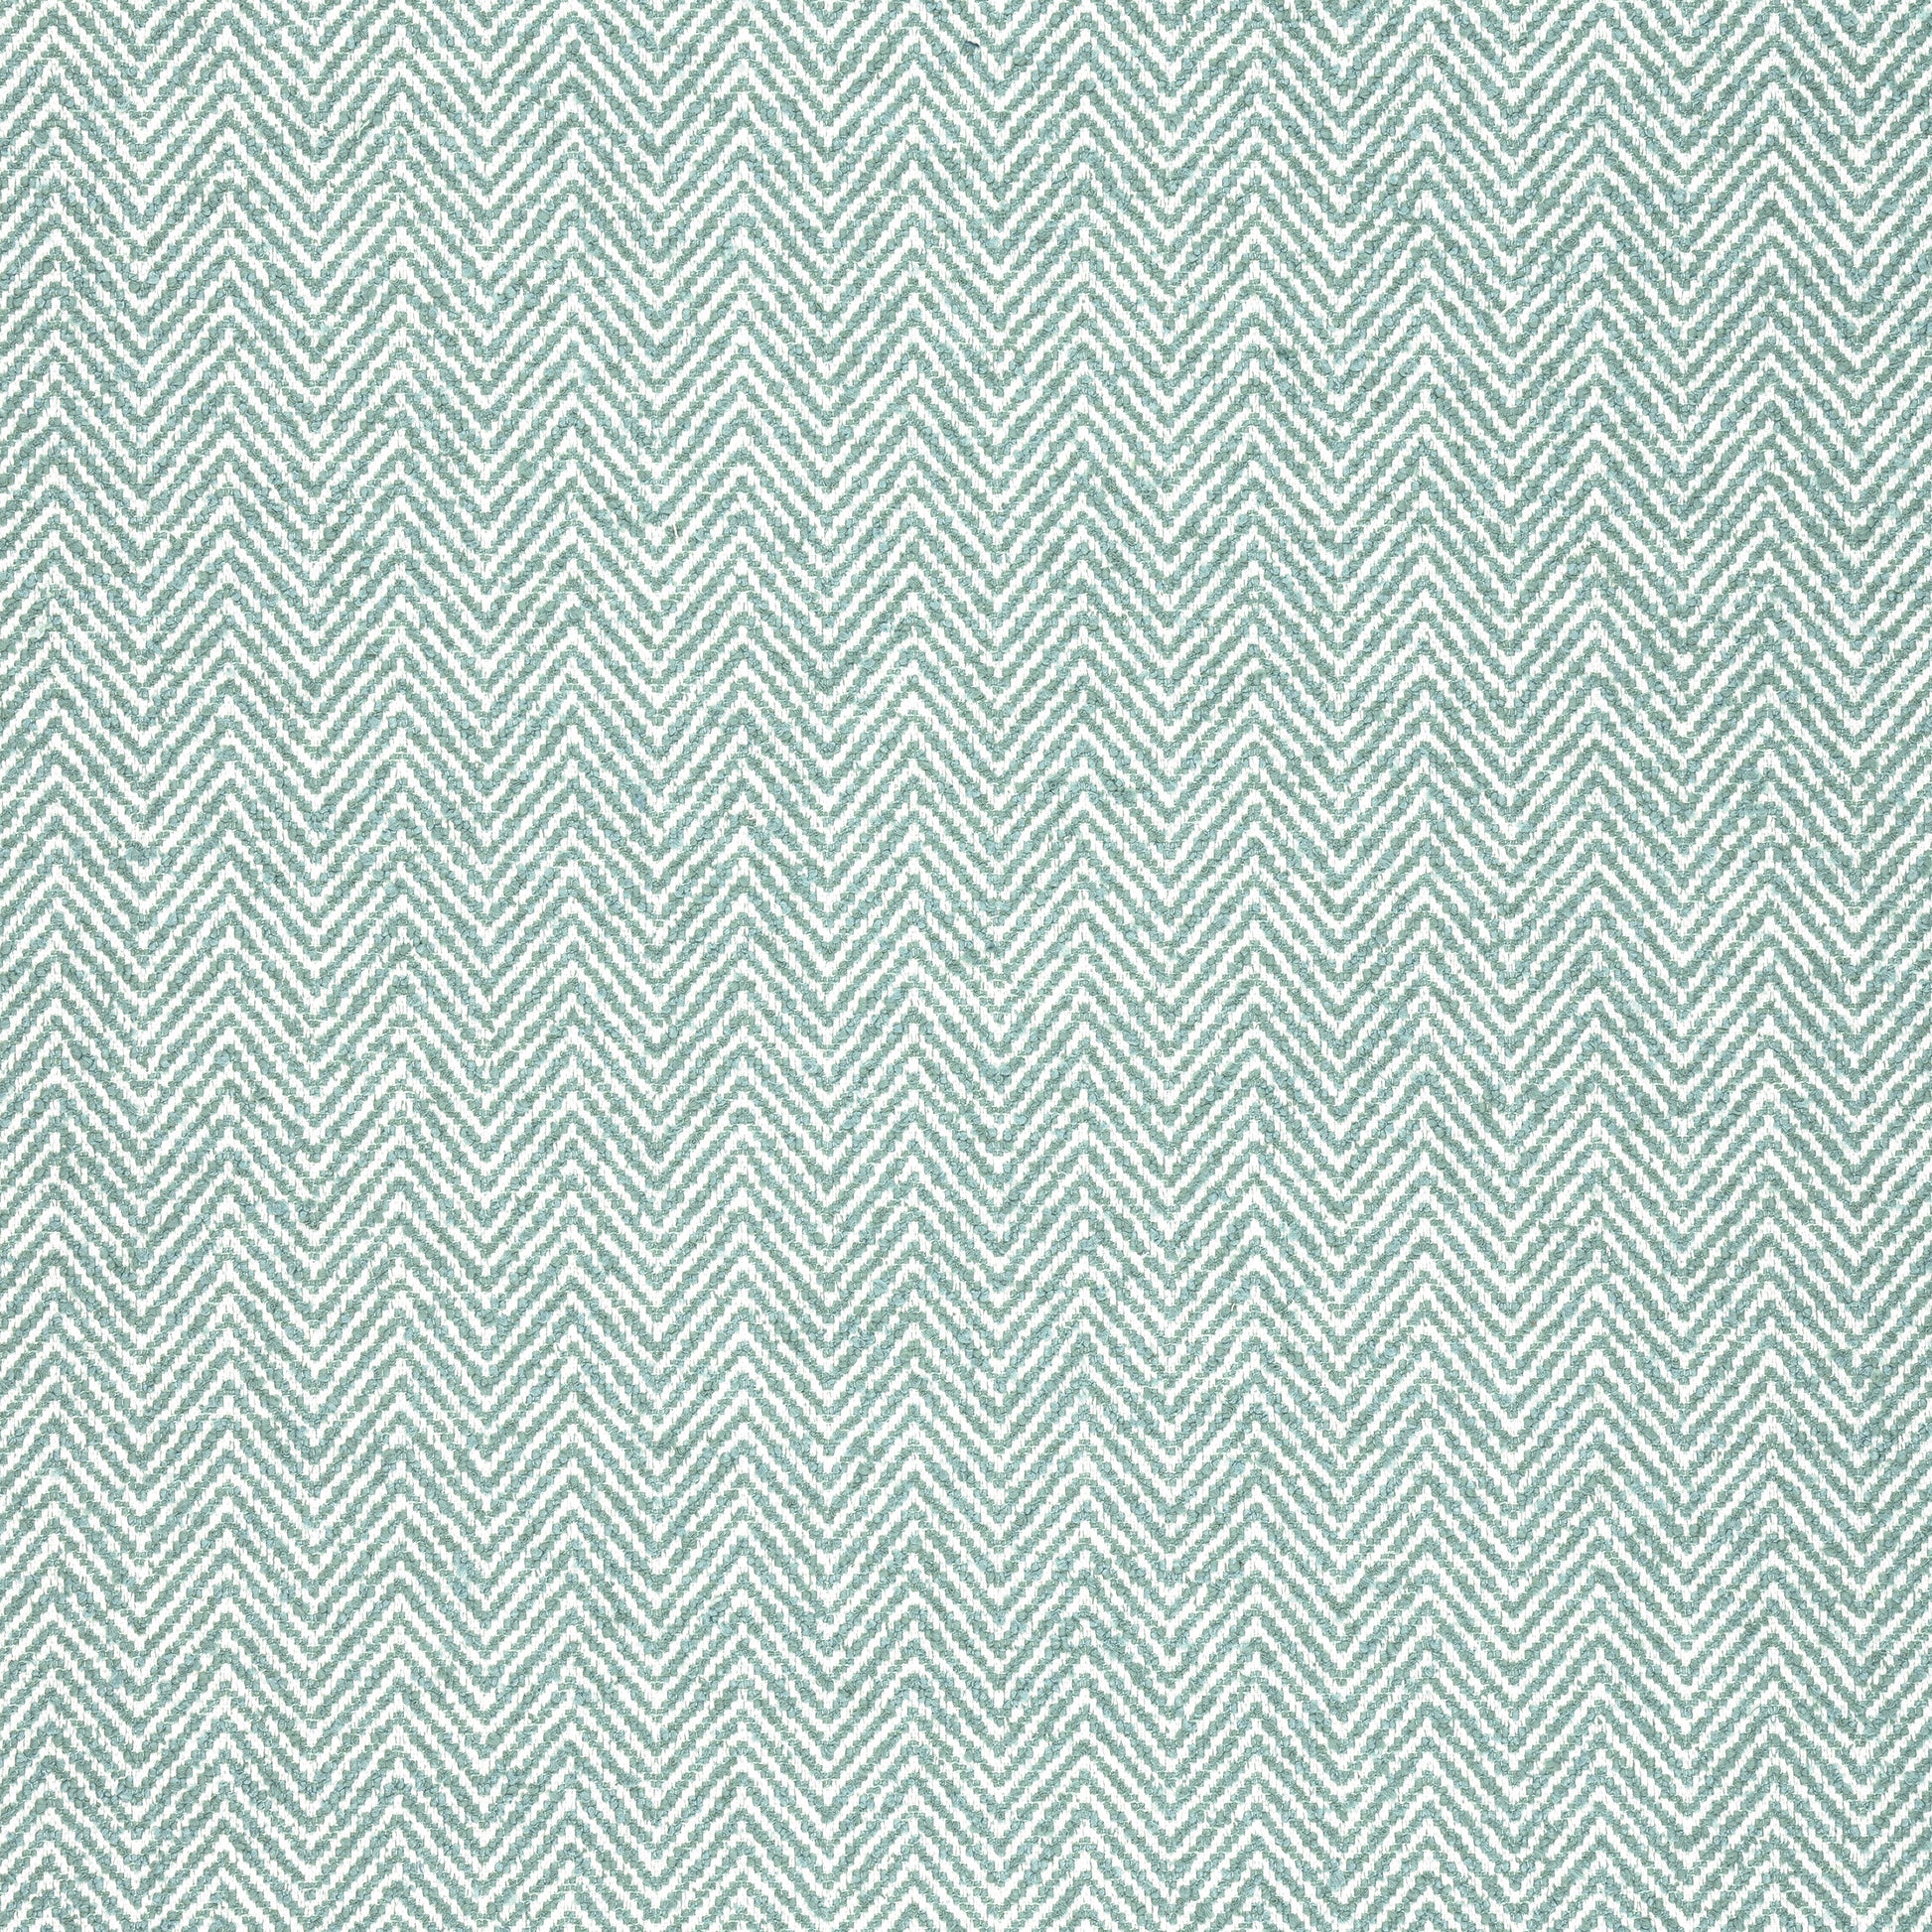 Purchase Thibaut Fabric Item# W77130 pattern name Monviso color Seafoam